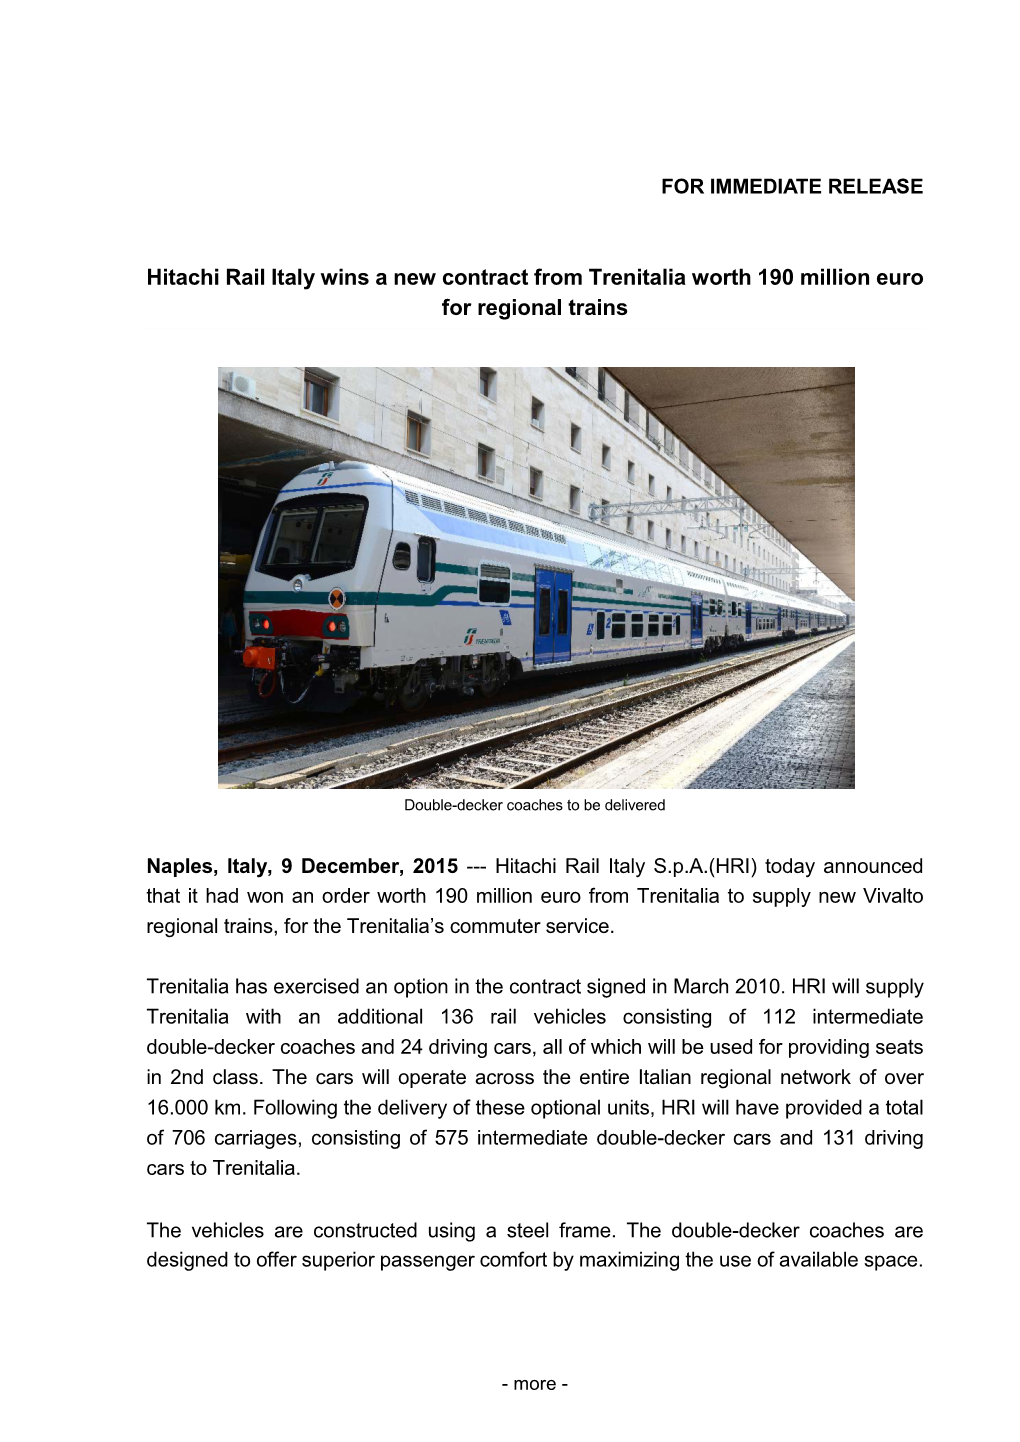 Hitachi Rail Italy Wins a New Contract from Trenitalia Worth 190 Million Euro for Regional Trains